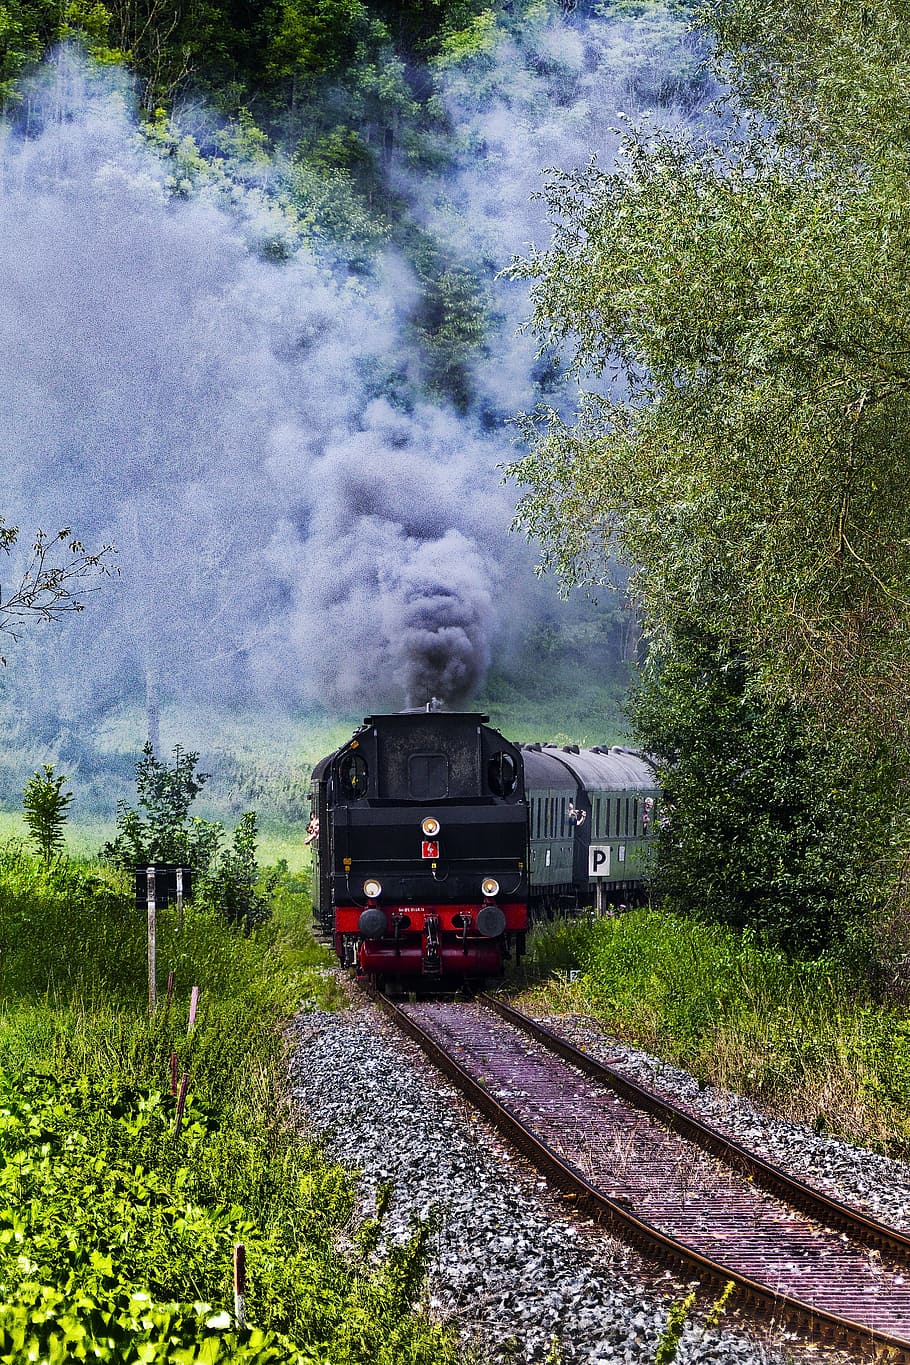 photo of train on railway during daytime, steam locomotive, tank locomotive